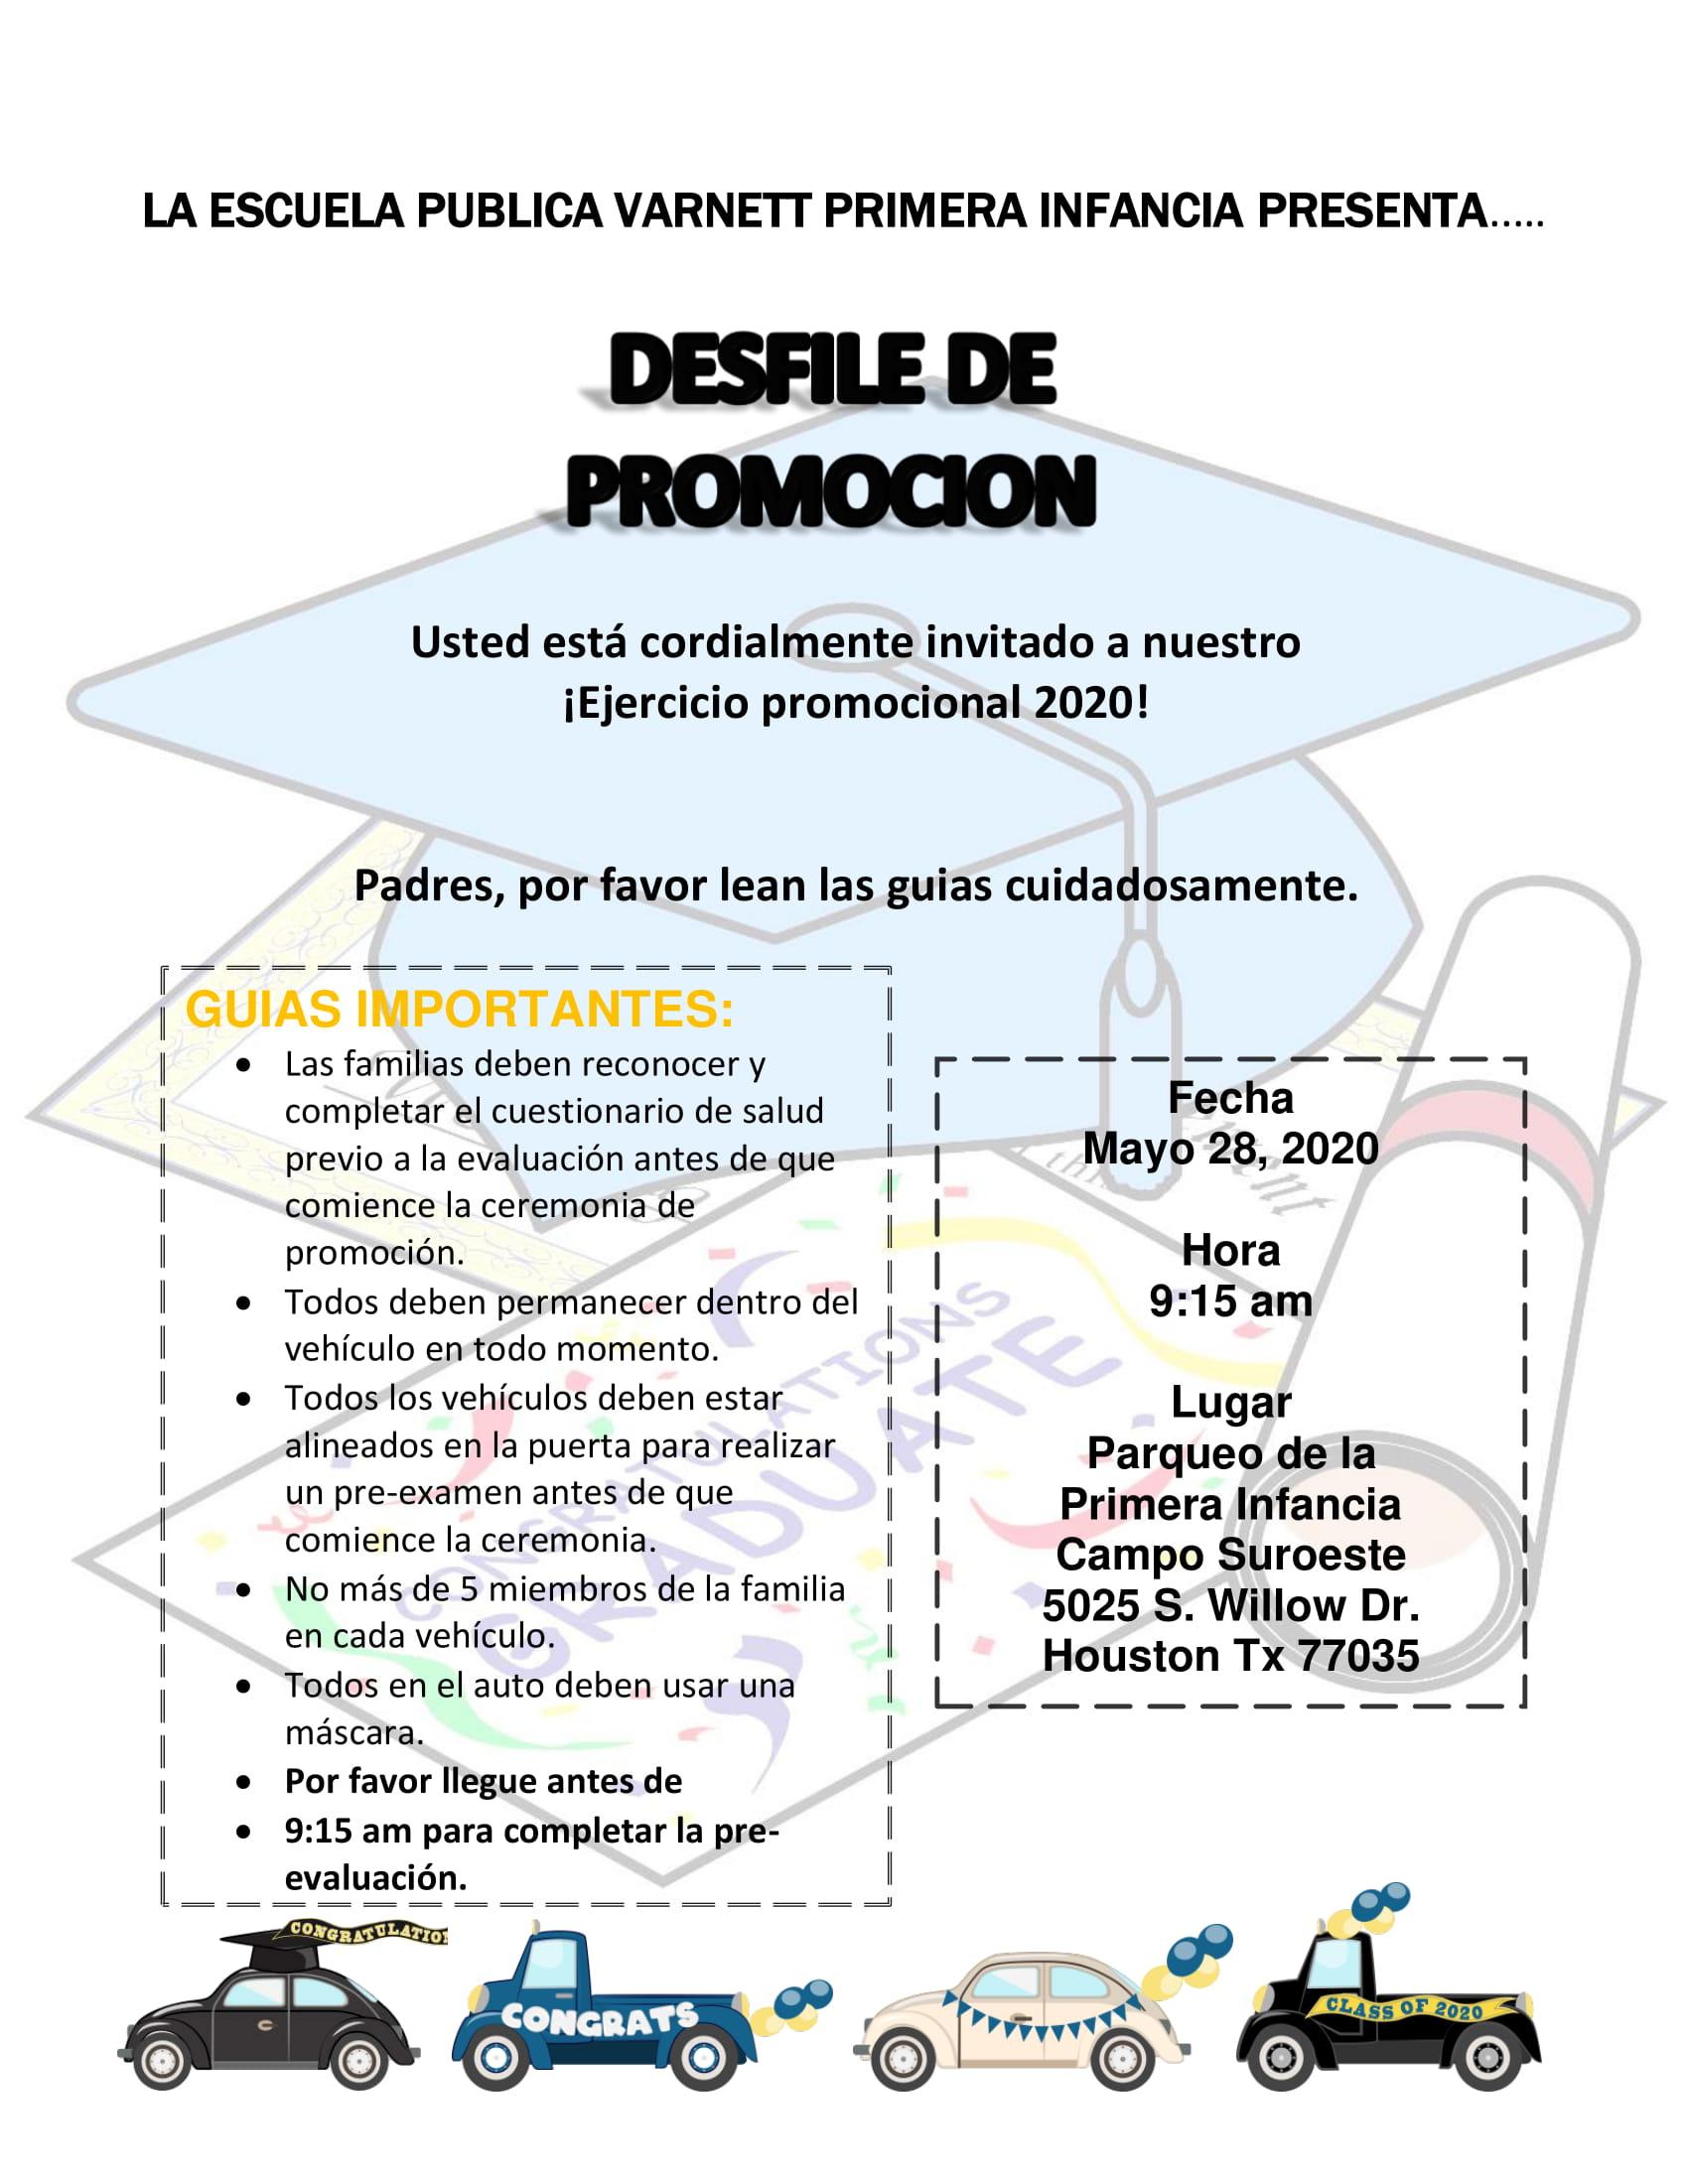 ECC Promotional Ceremony in Spanish